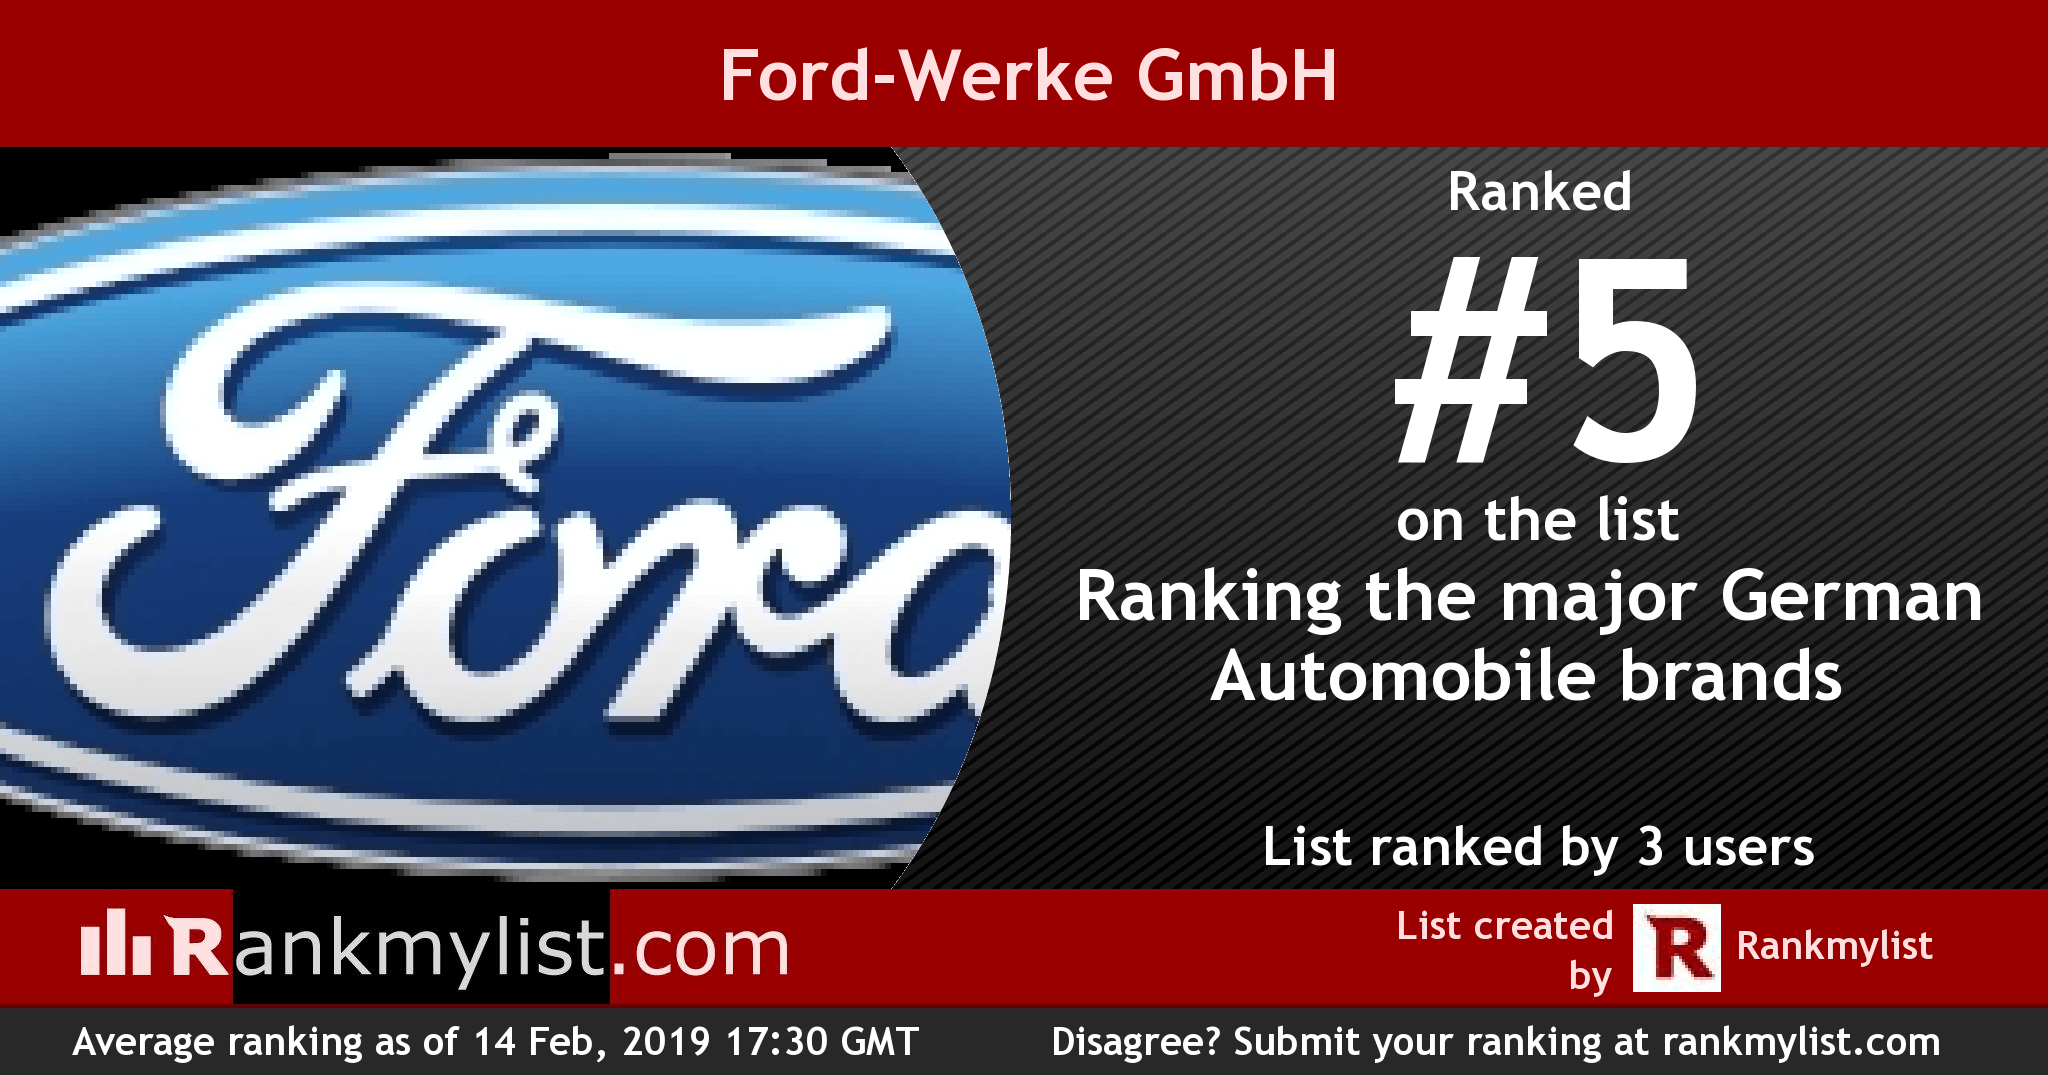 Ford Werke GmbH Logo - Ranking the major German Automobile brands - Ford-Werke GmbH